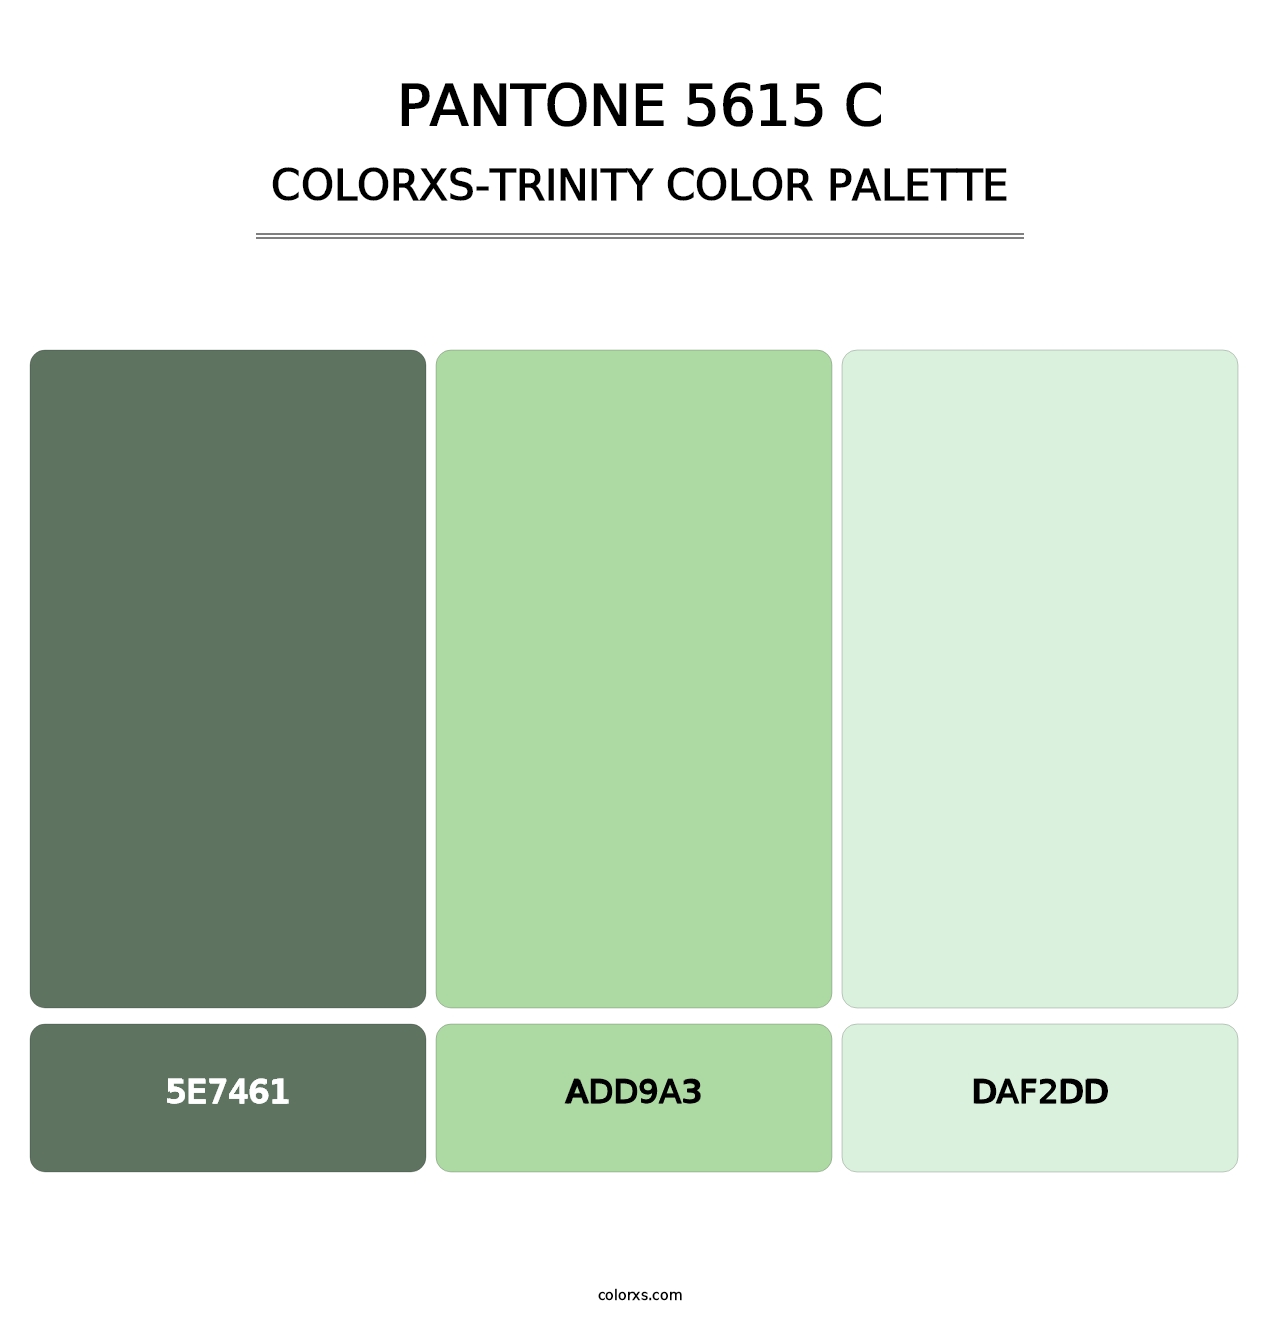 PANTONE 5615 C - Colorxs Trinity Palette